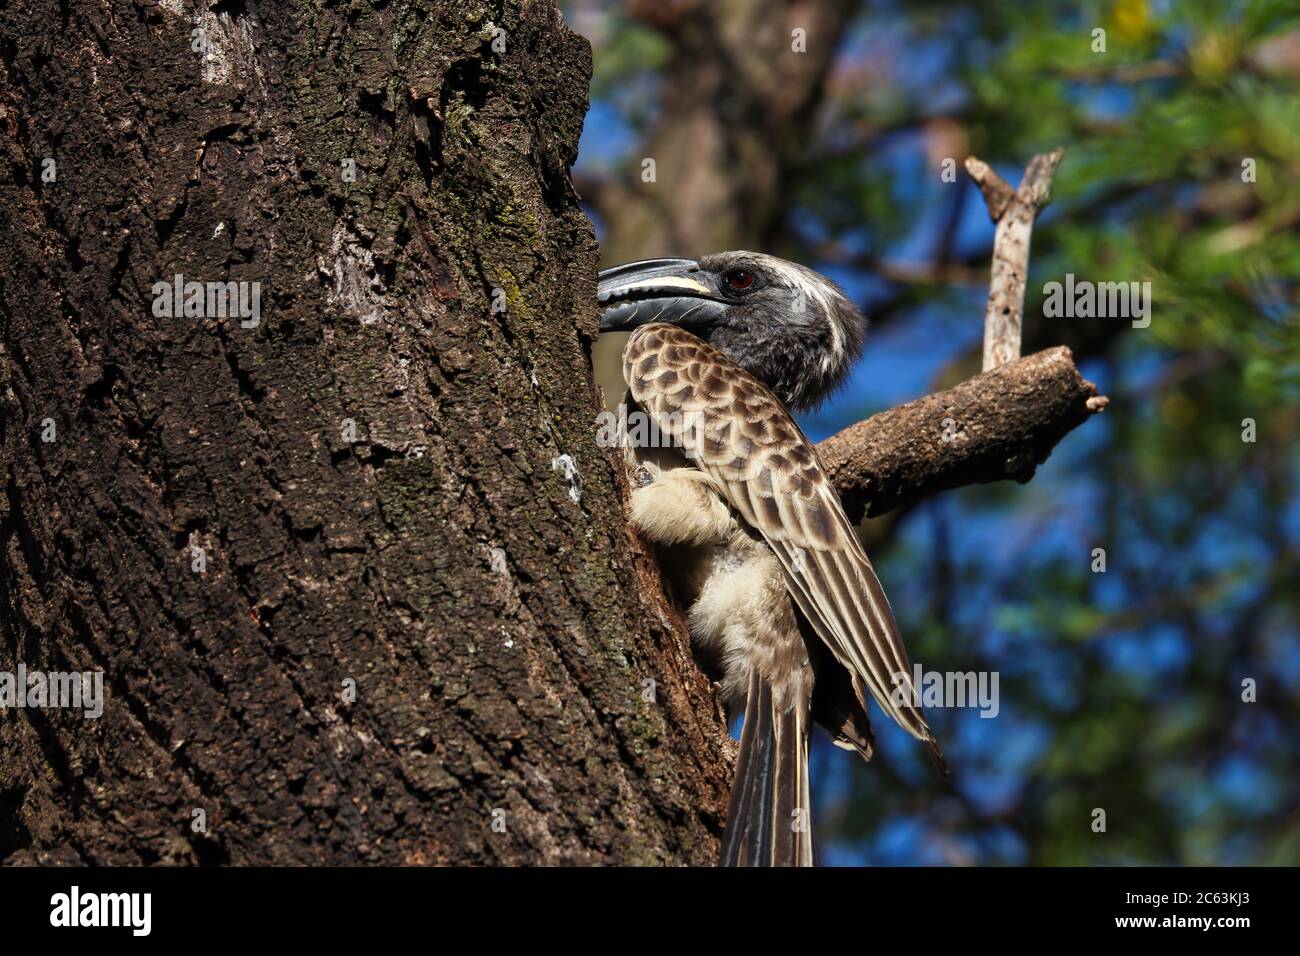 African Grey Hornbill Feeding His Partner In Nest (Lophoceros nasutus) Stock Photo